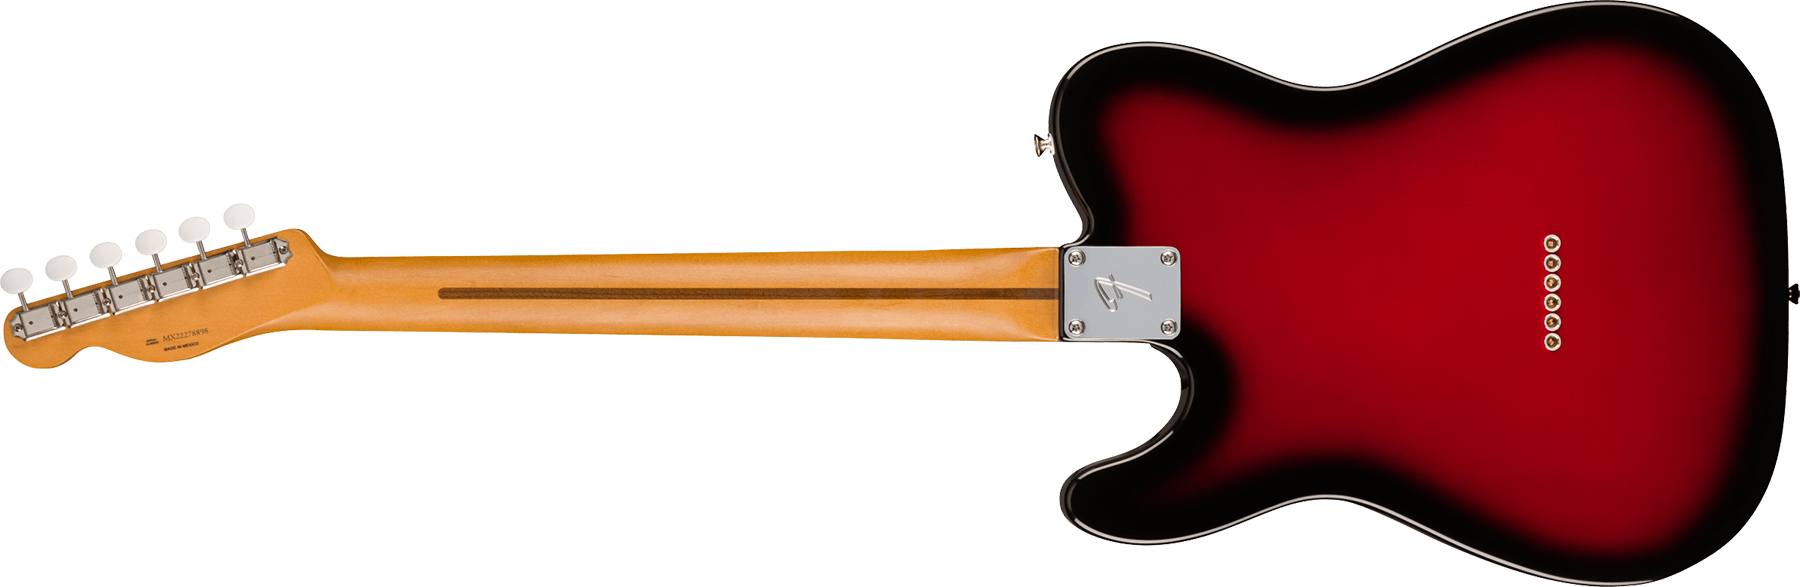 Fender Tele Gold Foil Ltd Mex 2mh Ht Eb - Candy Apple Burst - E-Gitarre in Teleform - Variation 1